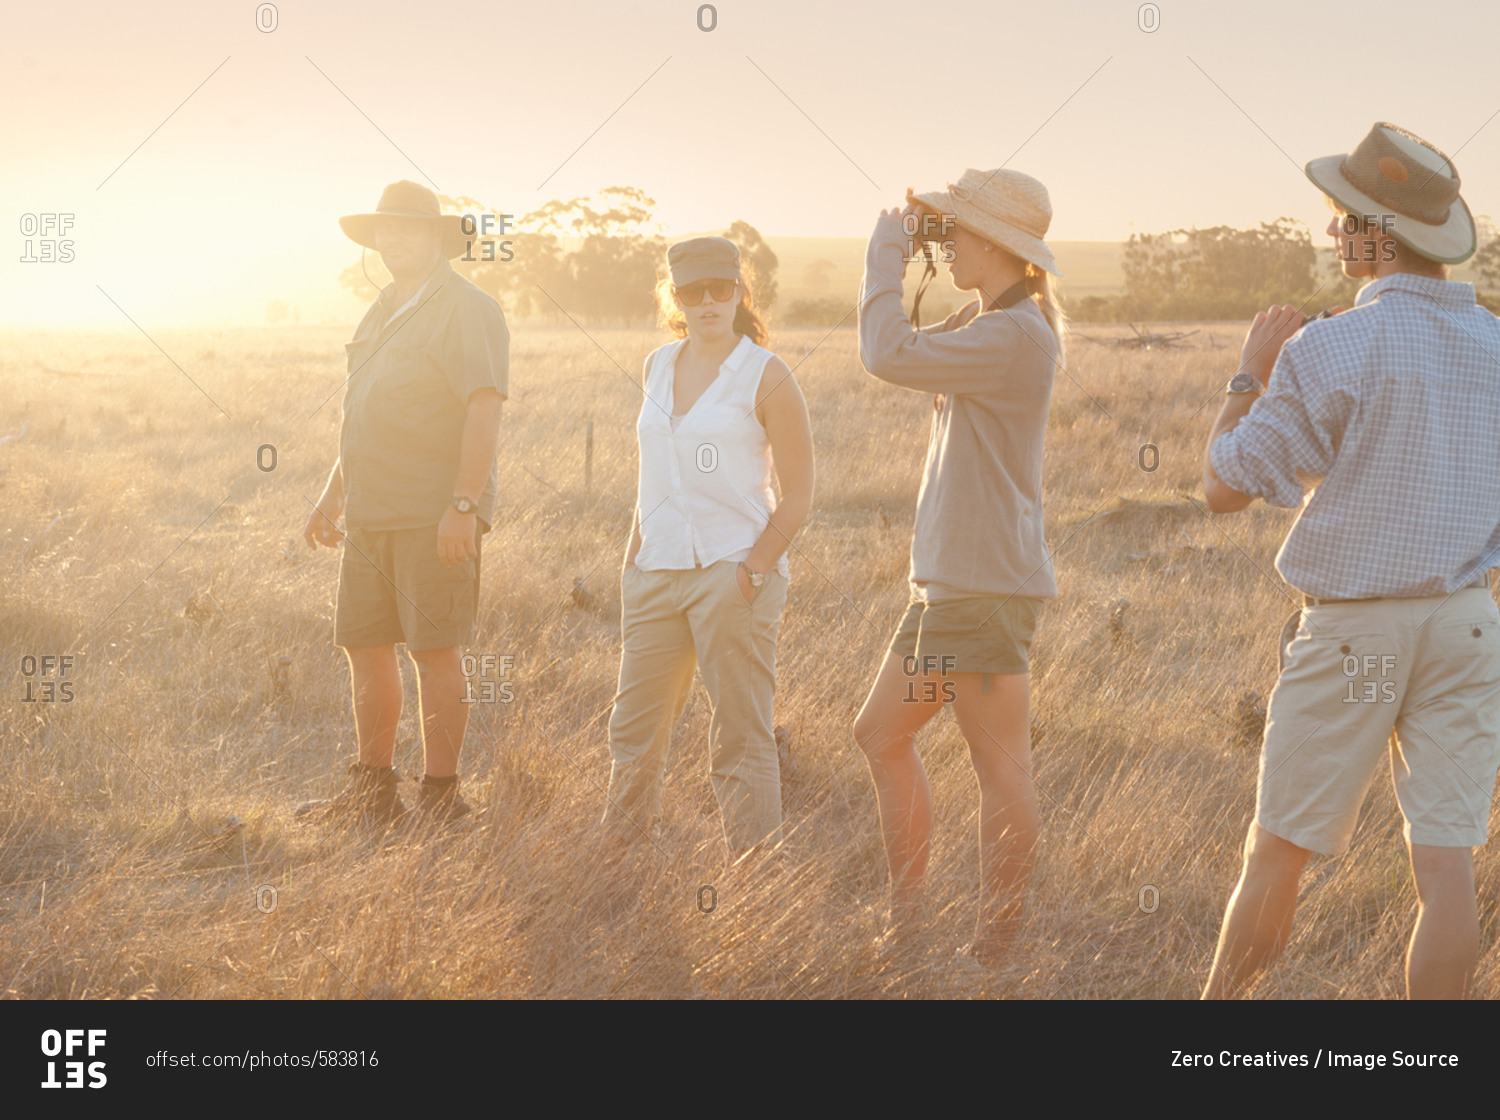 People using binoculars on a safari, Stellenbosch, South Africa